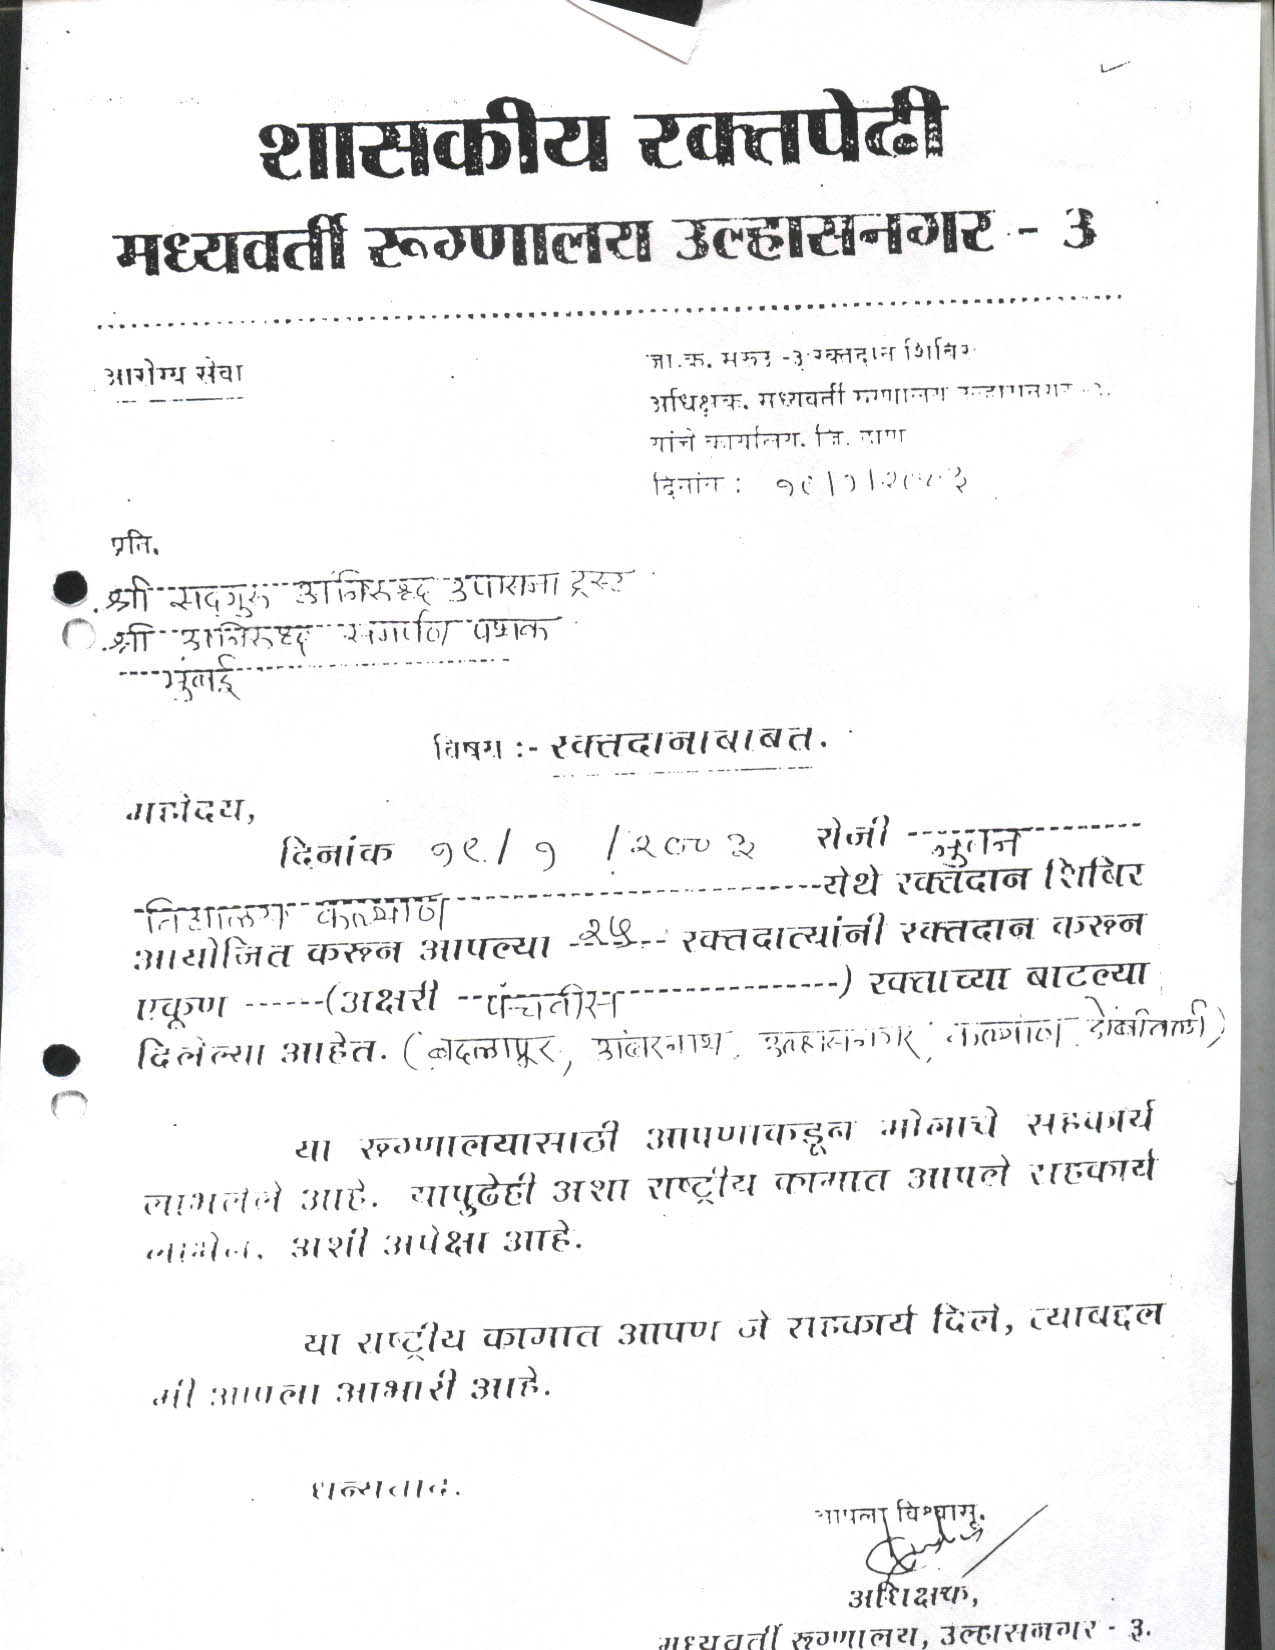 Appreciation-Letter fromCivil Hospital Ulhasnagar 2003-for-Aniruddhafoundation-Compassion-Social-services